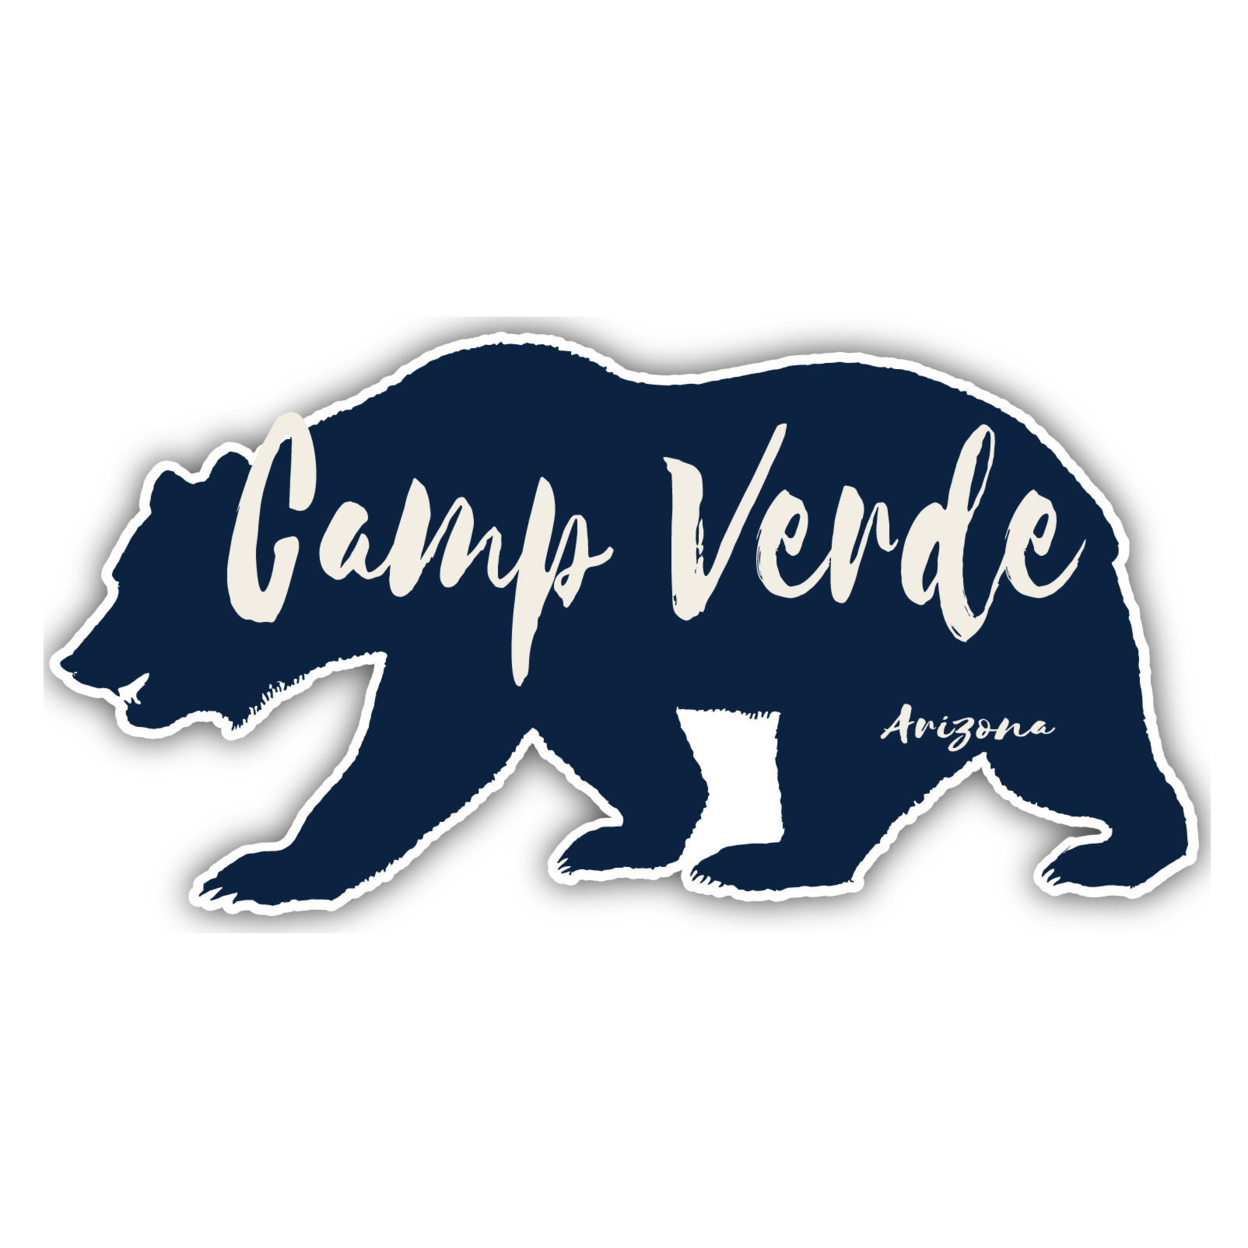 Camp Verde Arizona Souvenir Decorative Stickers (Choose Theme And Size) - Single Unit, 12-Inch, Camp Life